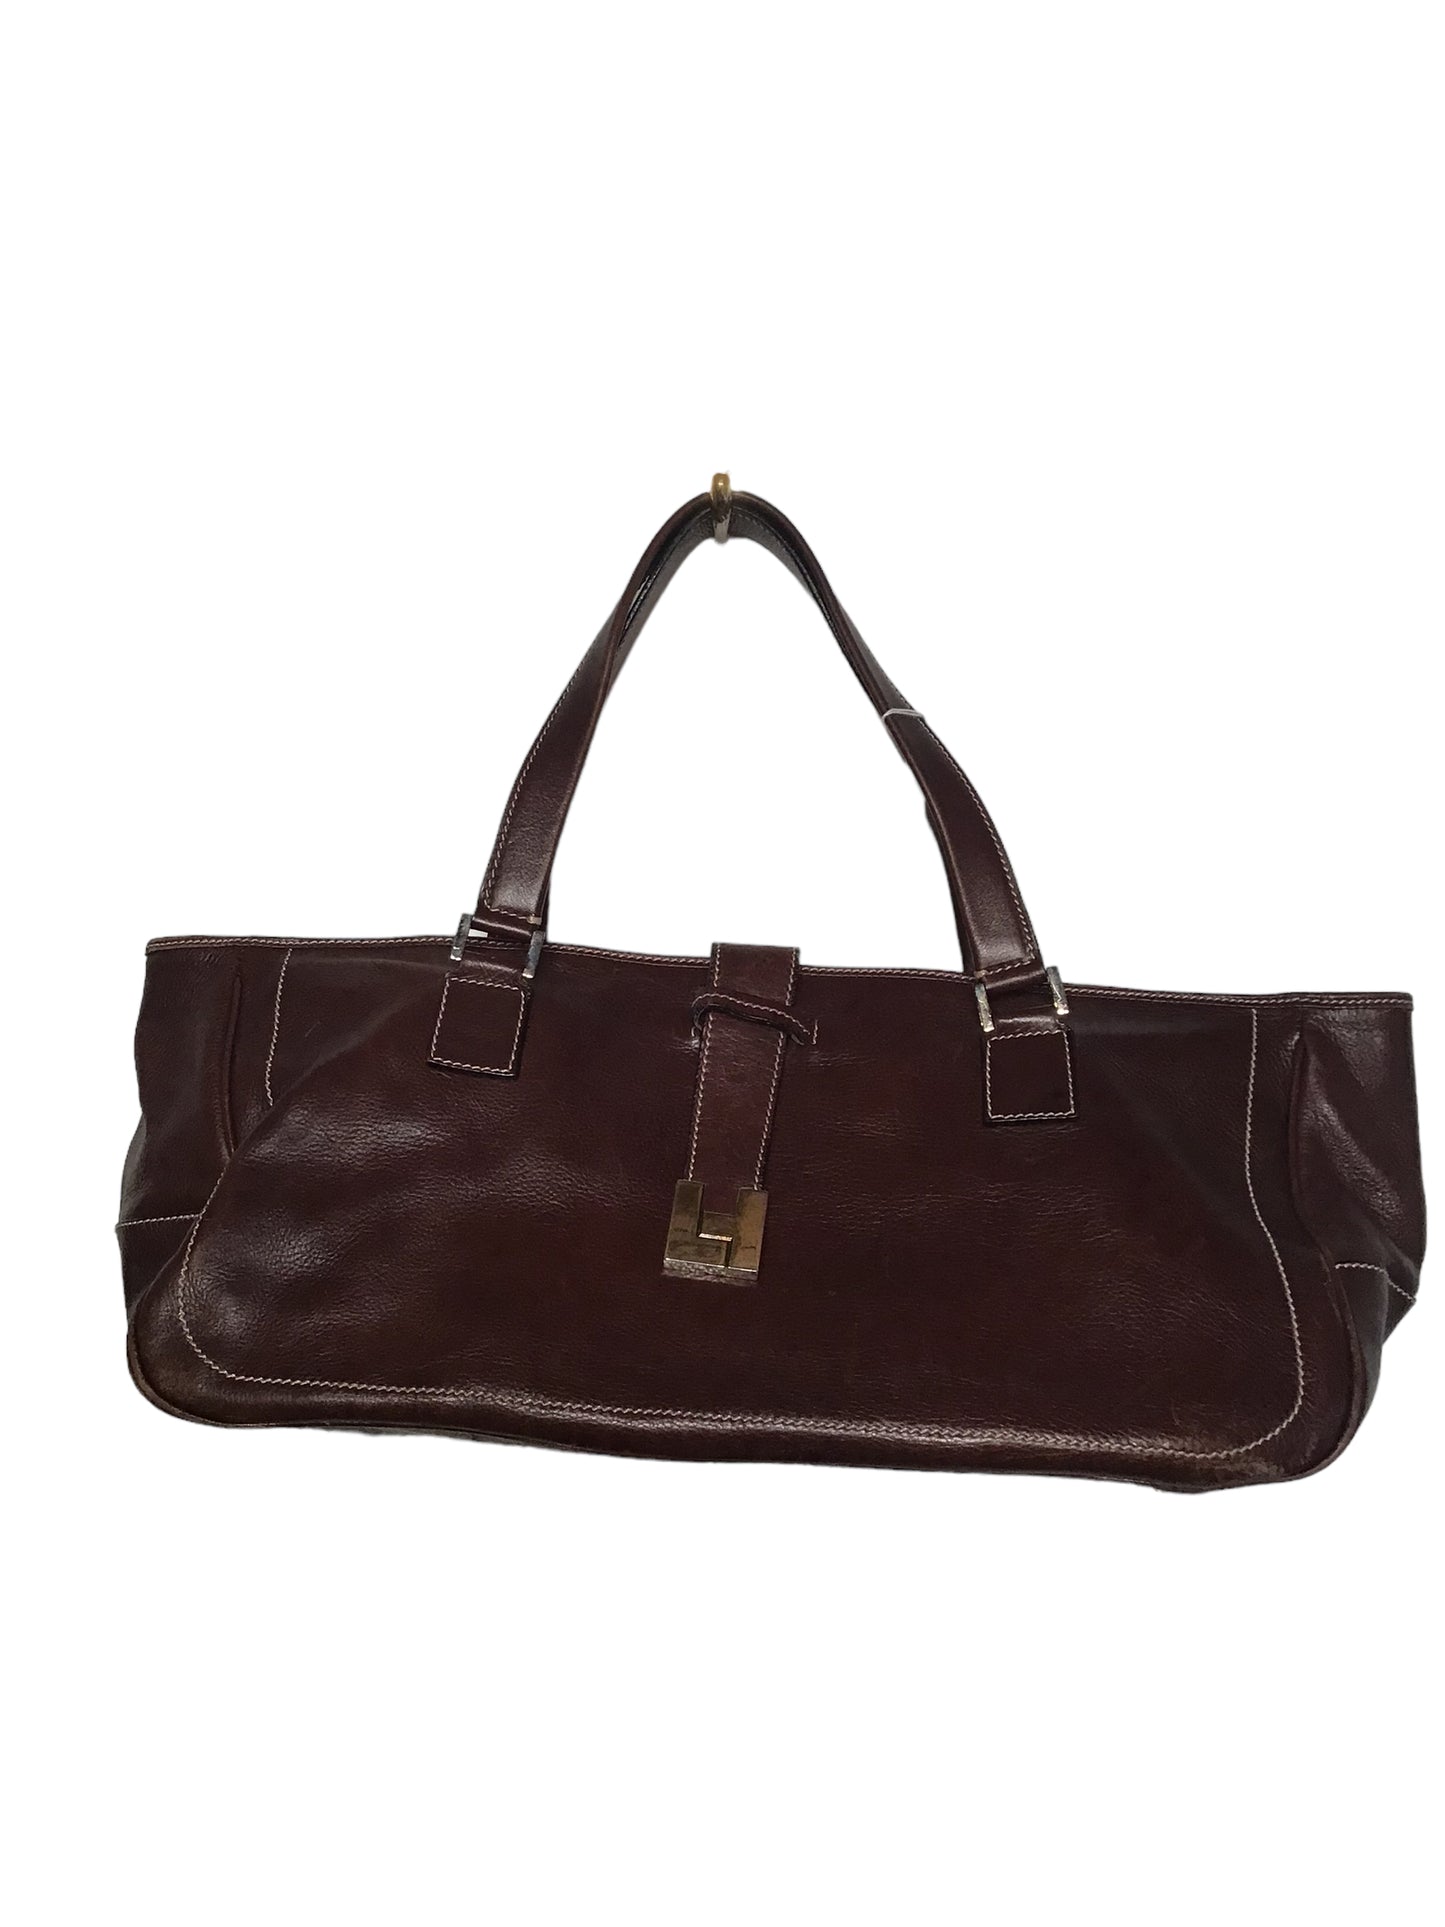 Leather Brown Bag (W53xH23cm)